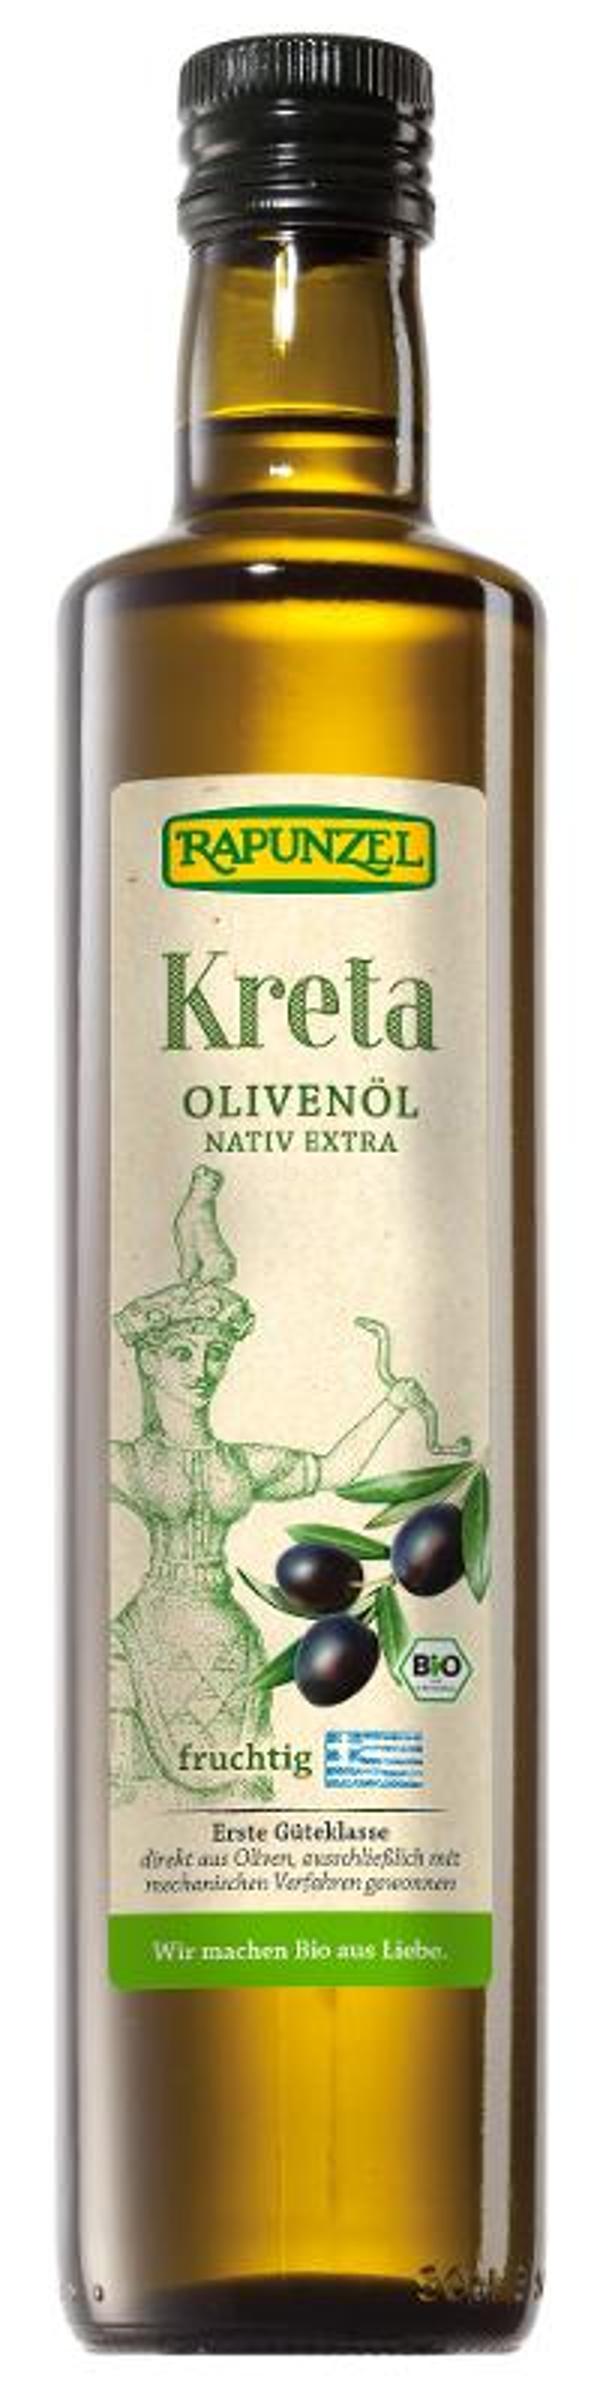 Produktfoto zu Rapunzel Olivenöl Kreta - 0,5l